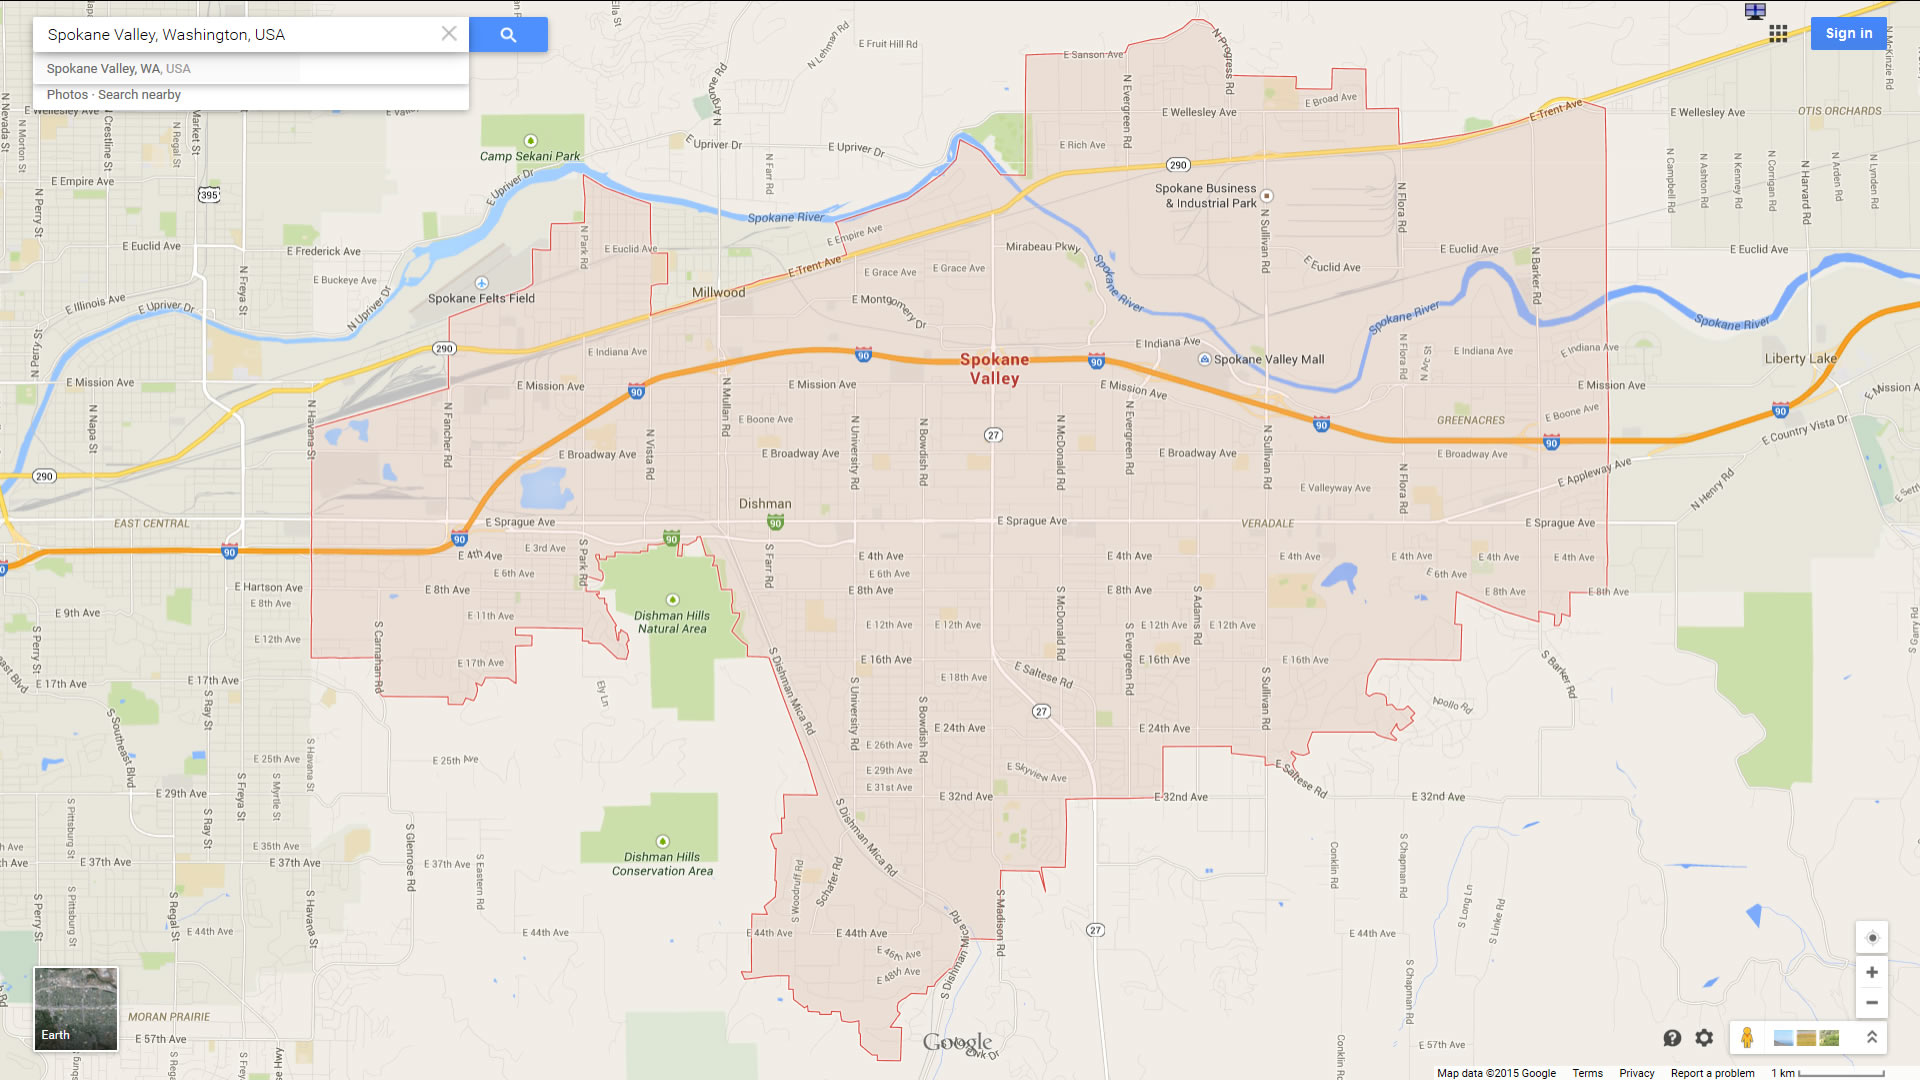 spokane county assessor pictometry map